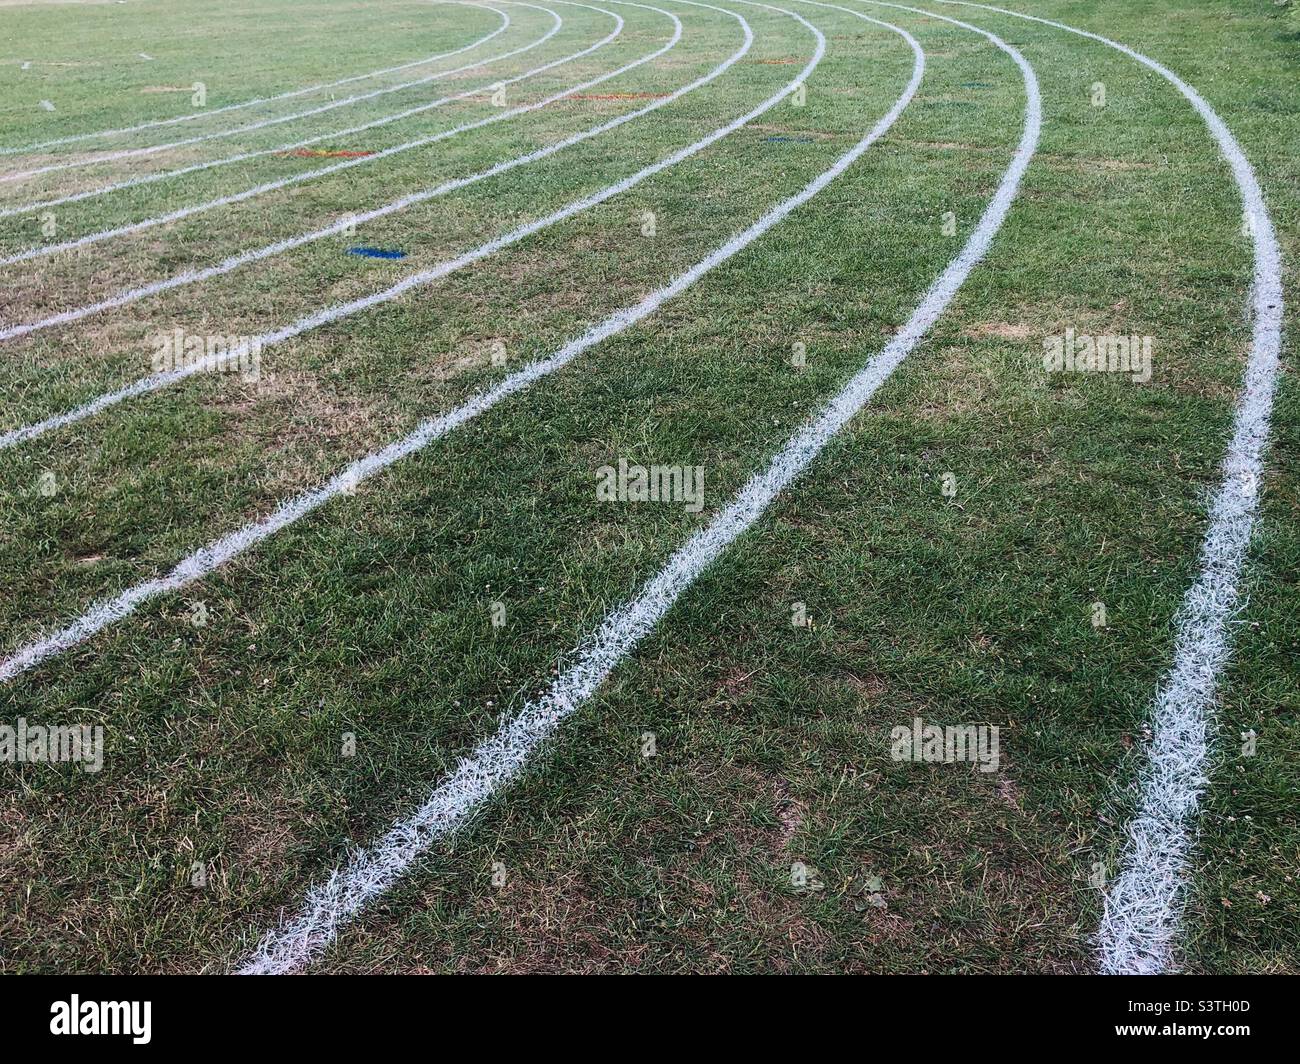 Running tracks on grass Stock Photo